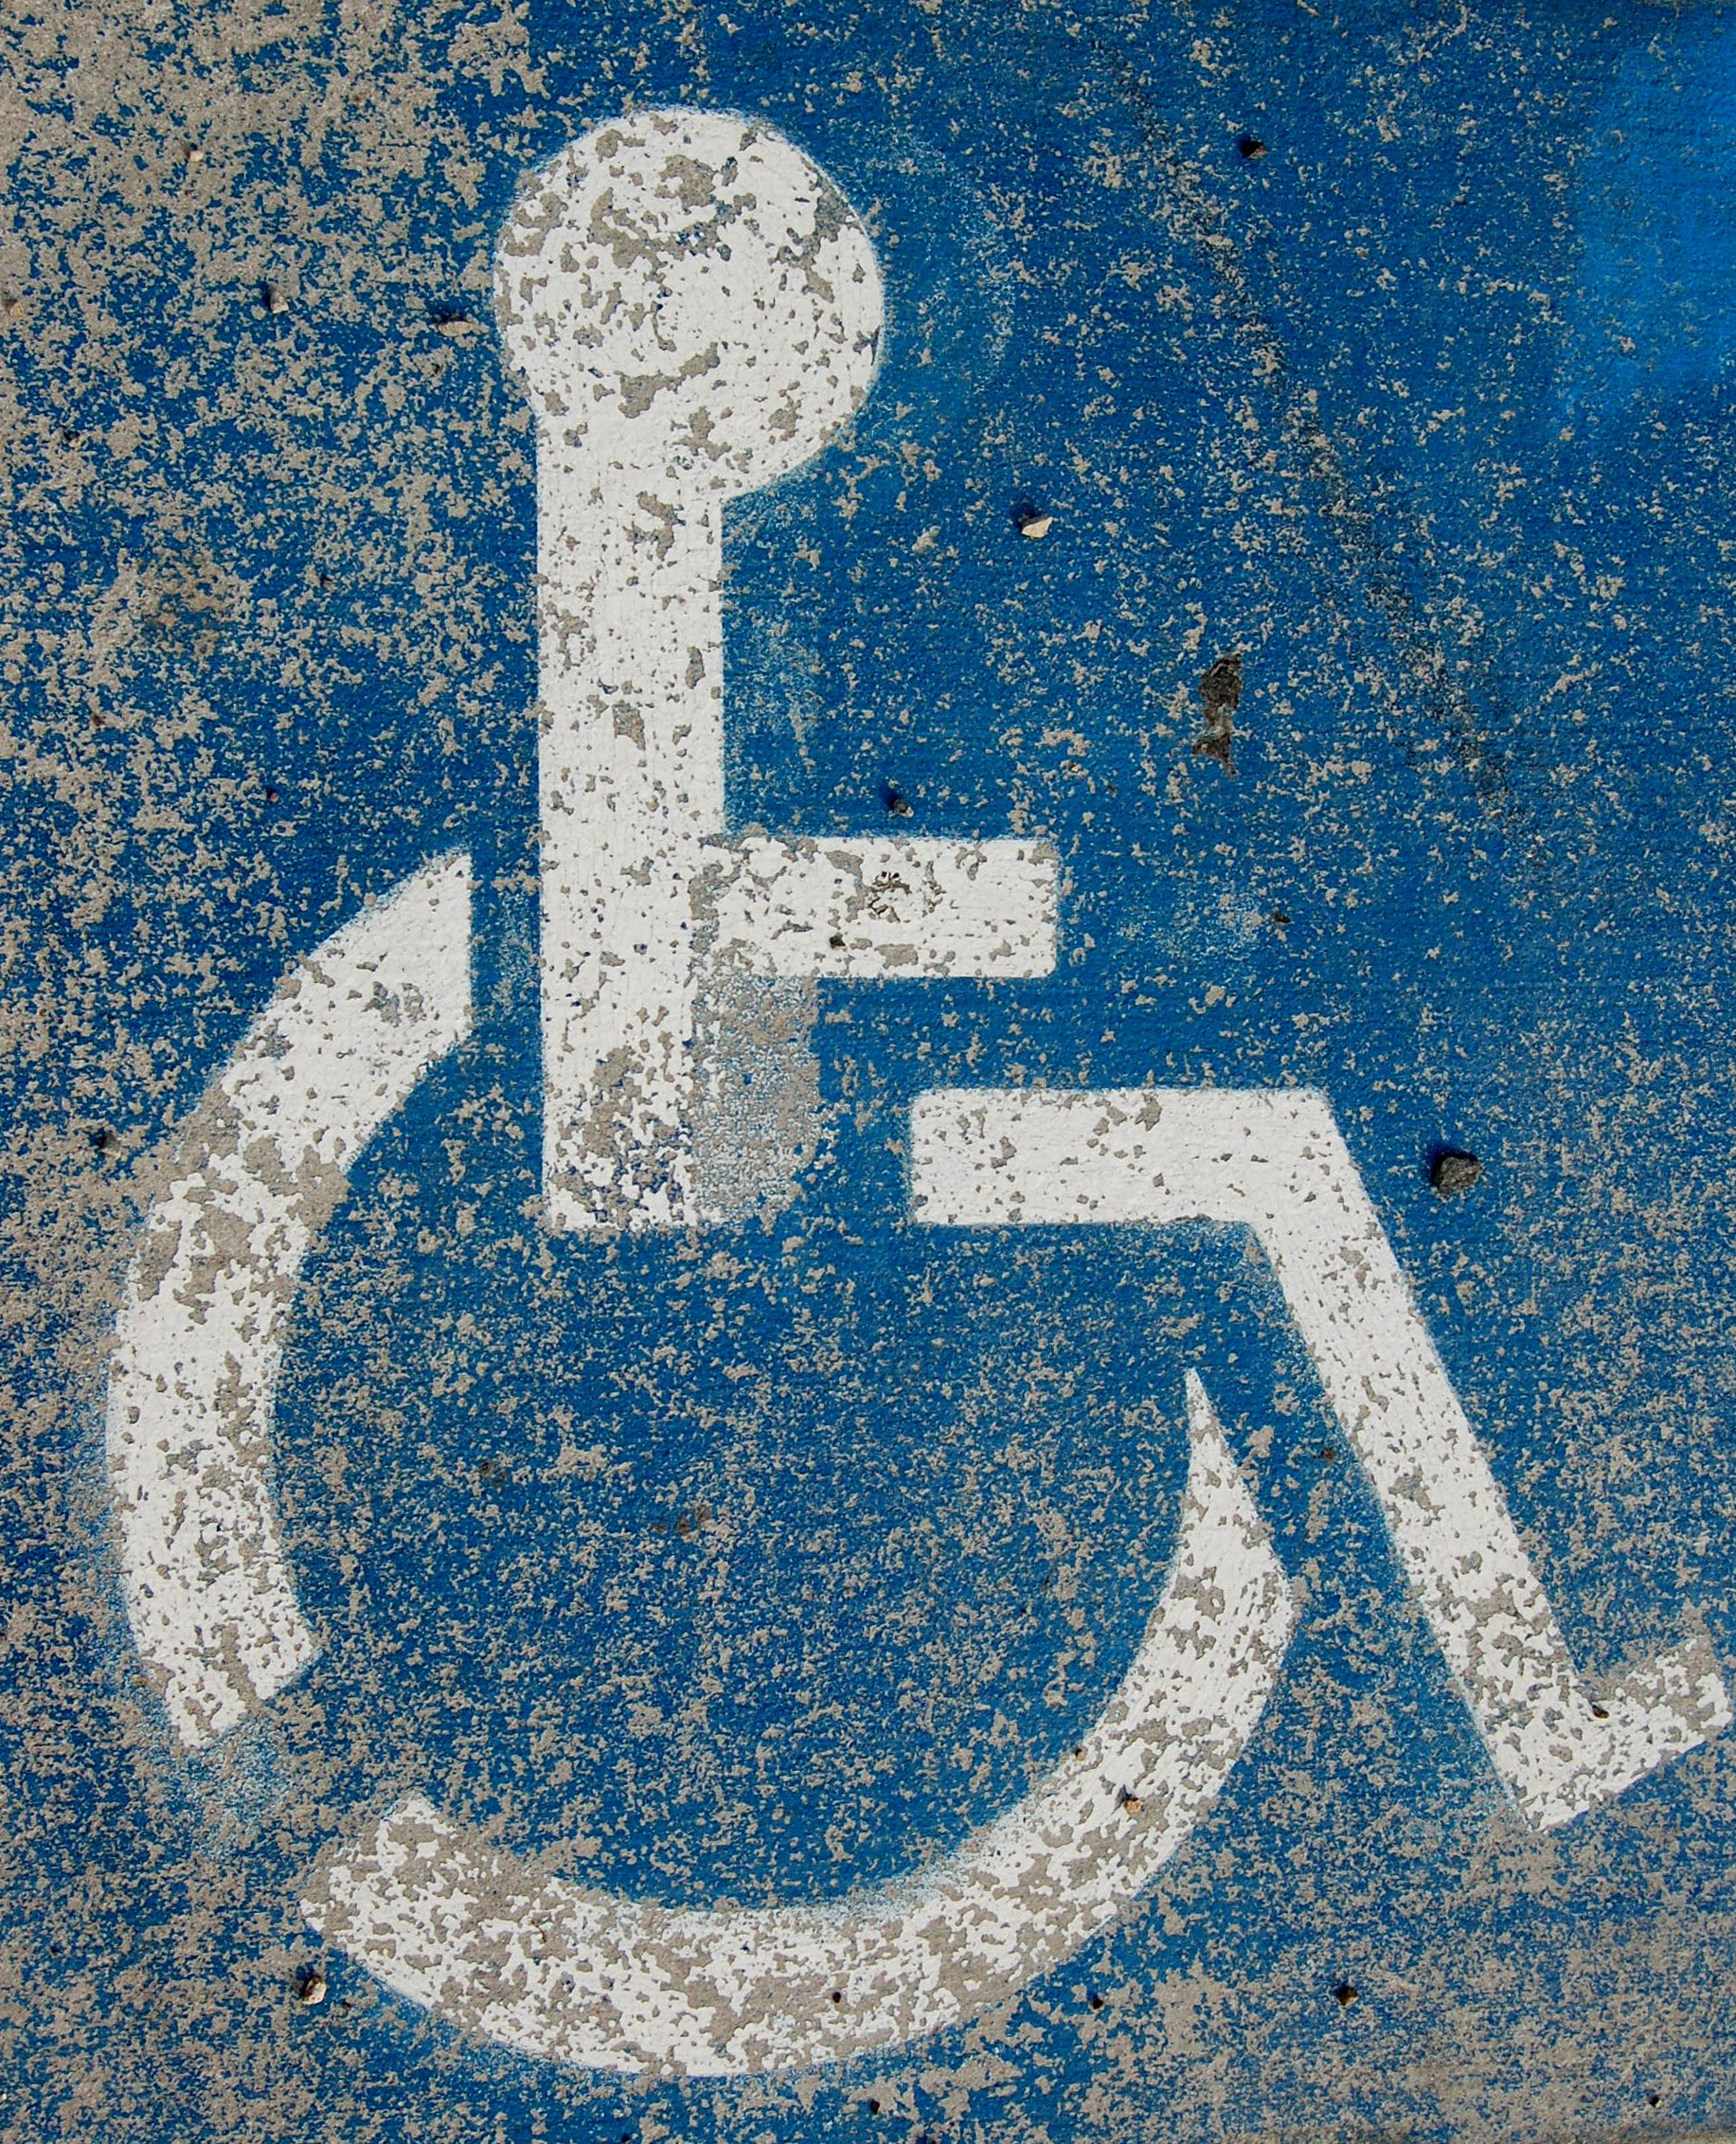 Disabled Writers Lily Blaze Photo by Matt Artz on Unsplash